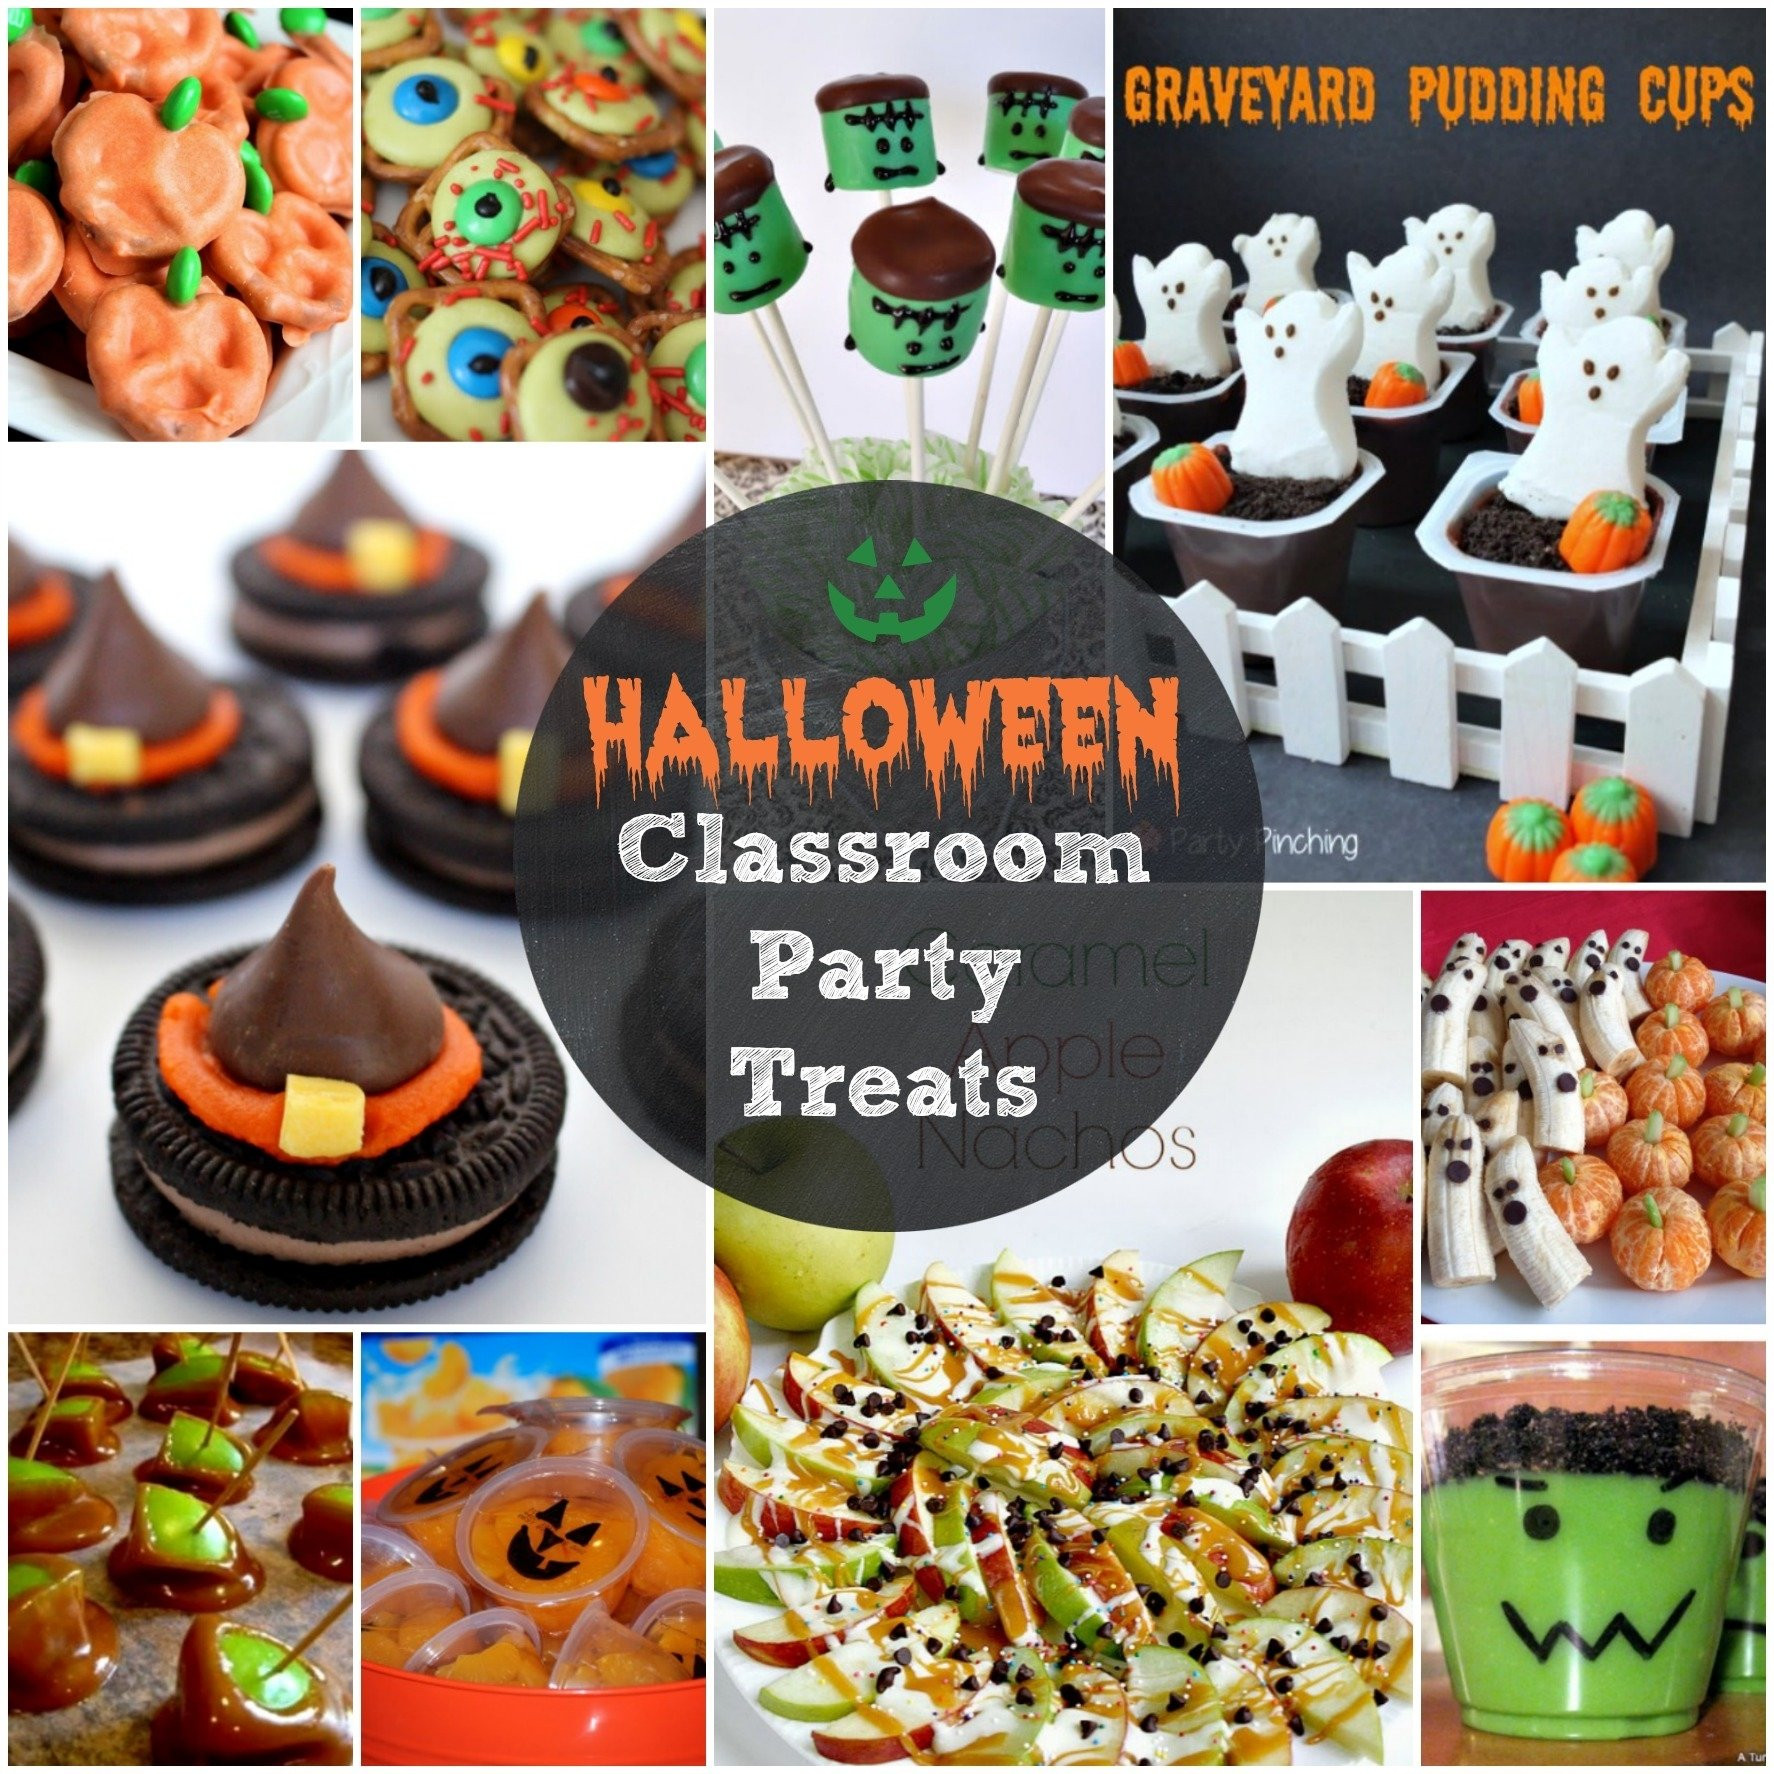 Halloween Ideas For School Party
 10 Unique Halloween Treat Ideas For School Parties 2019